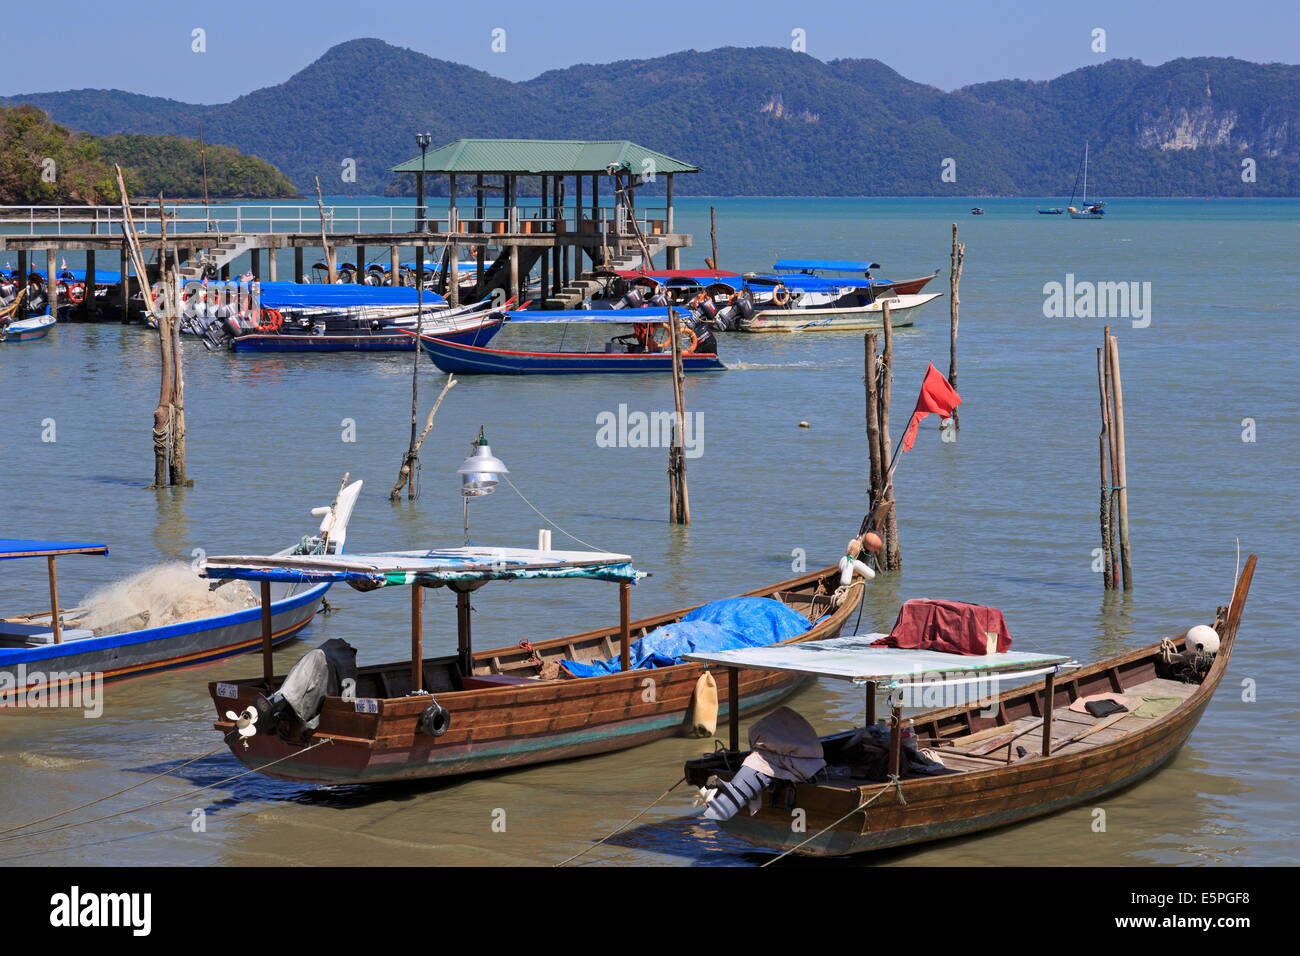 Fishing boats in Porto Malai, Chenang City, Langkawi Island, Malaysia, Southeast Asia, Asia Stock Photo